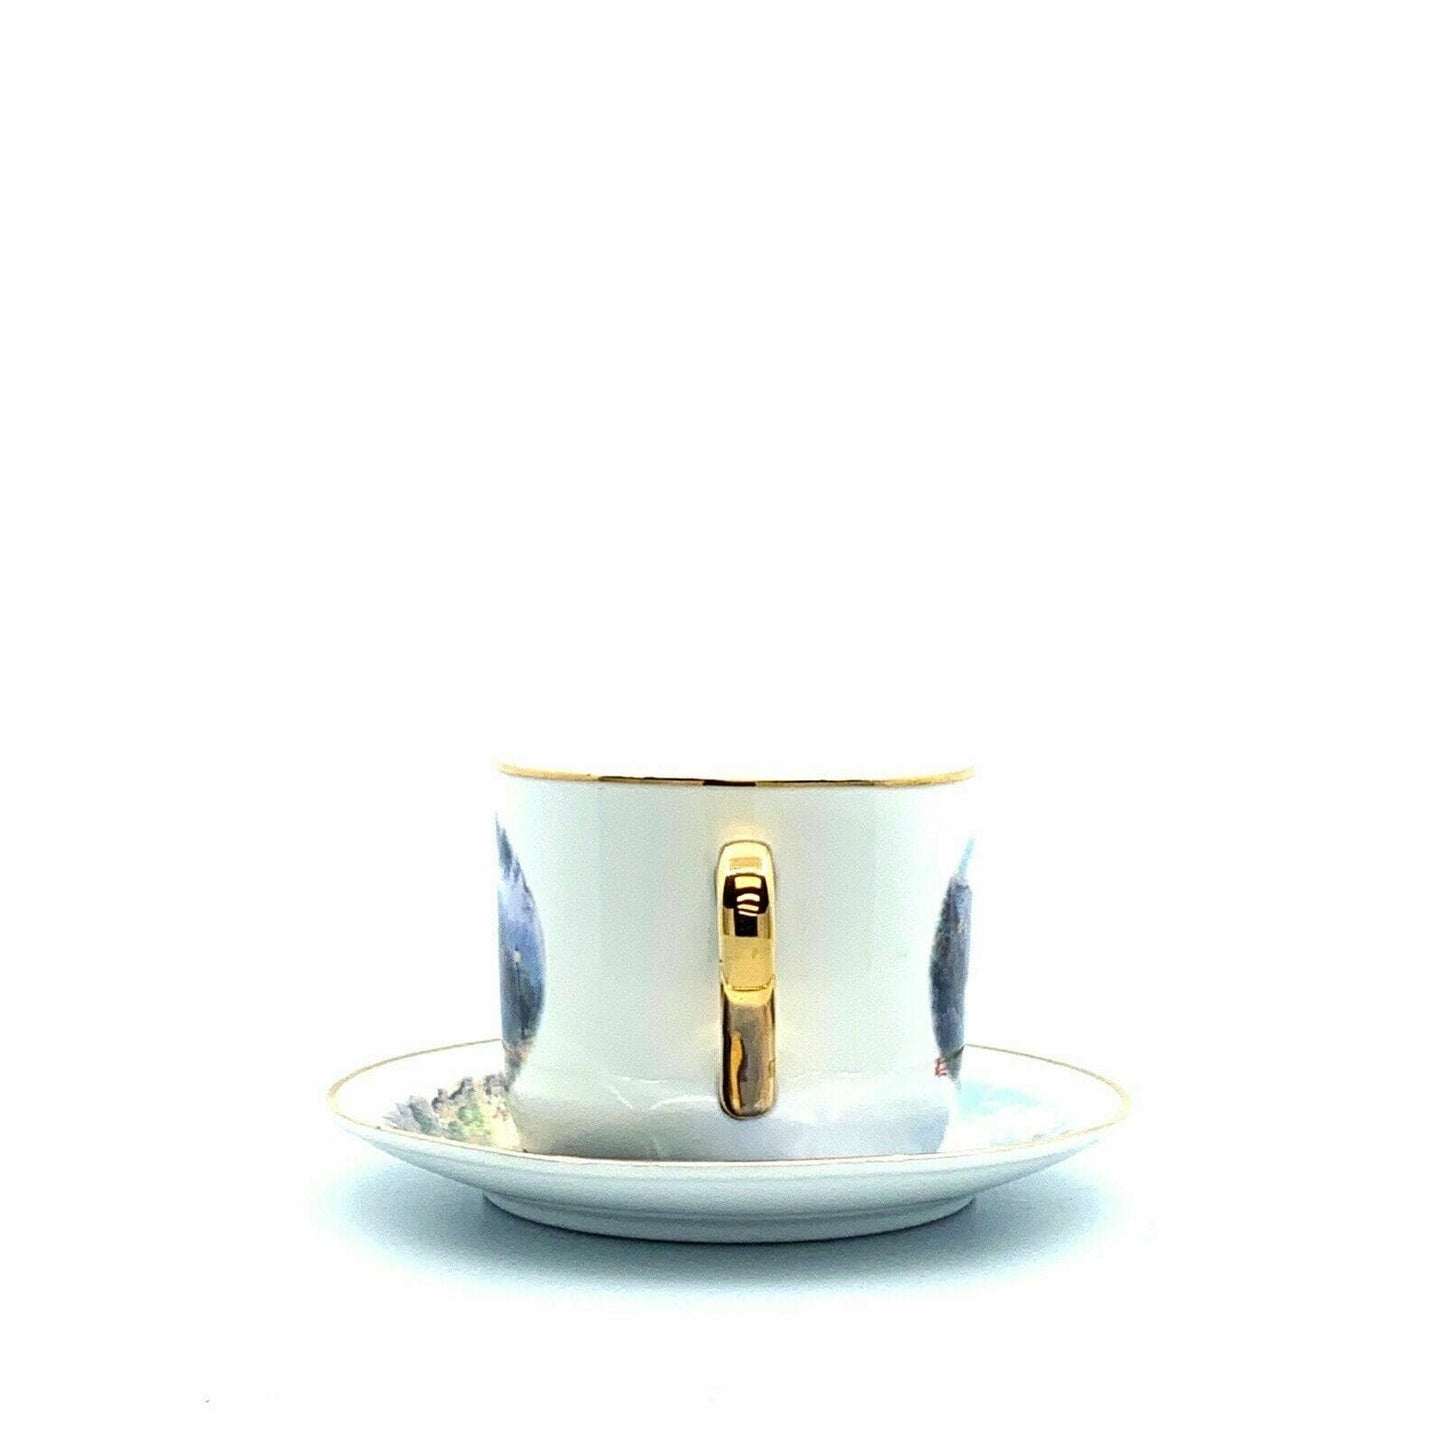 Thomas Kinkade Painter of Light “Moonlight Cottage” Porcelain Coffee Cup & Saucer Set